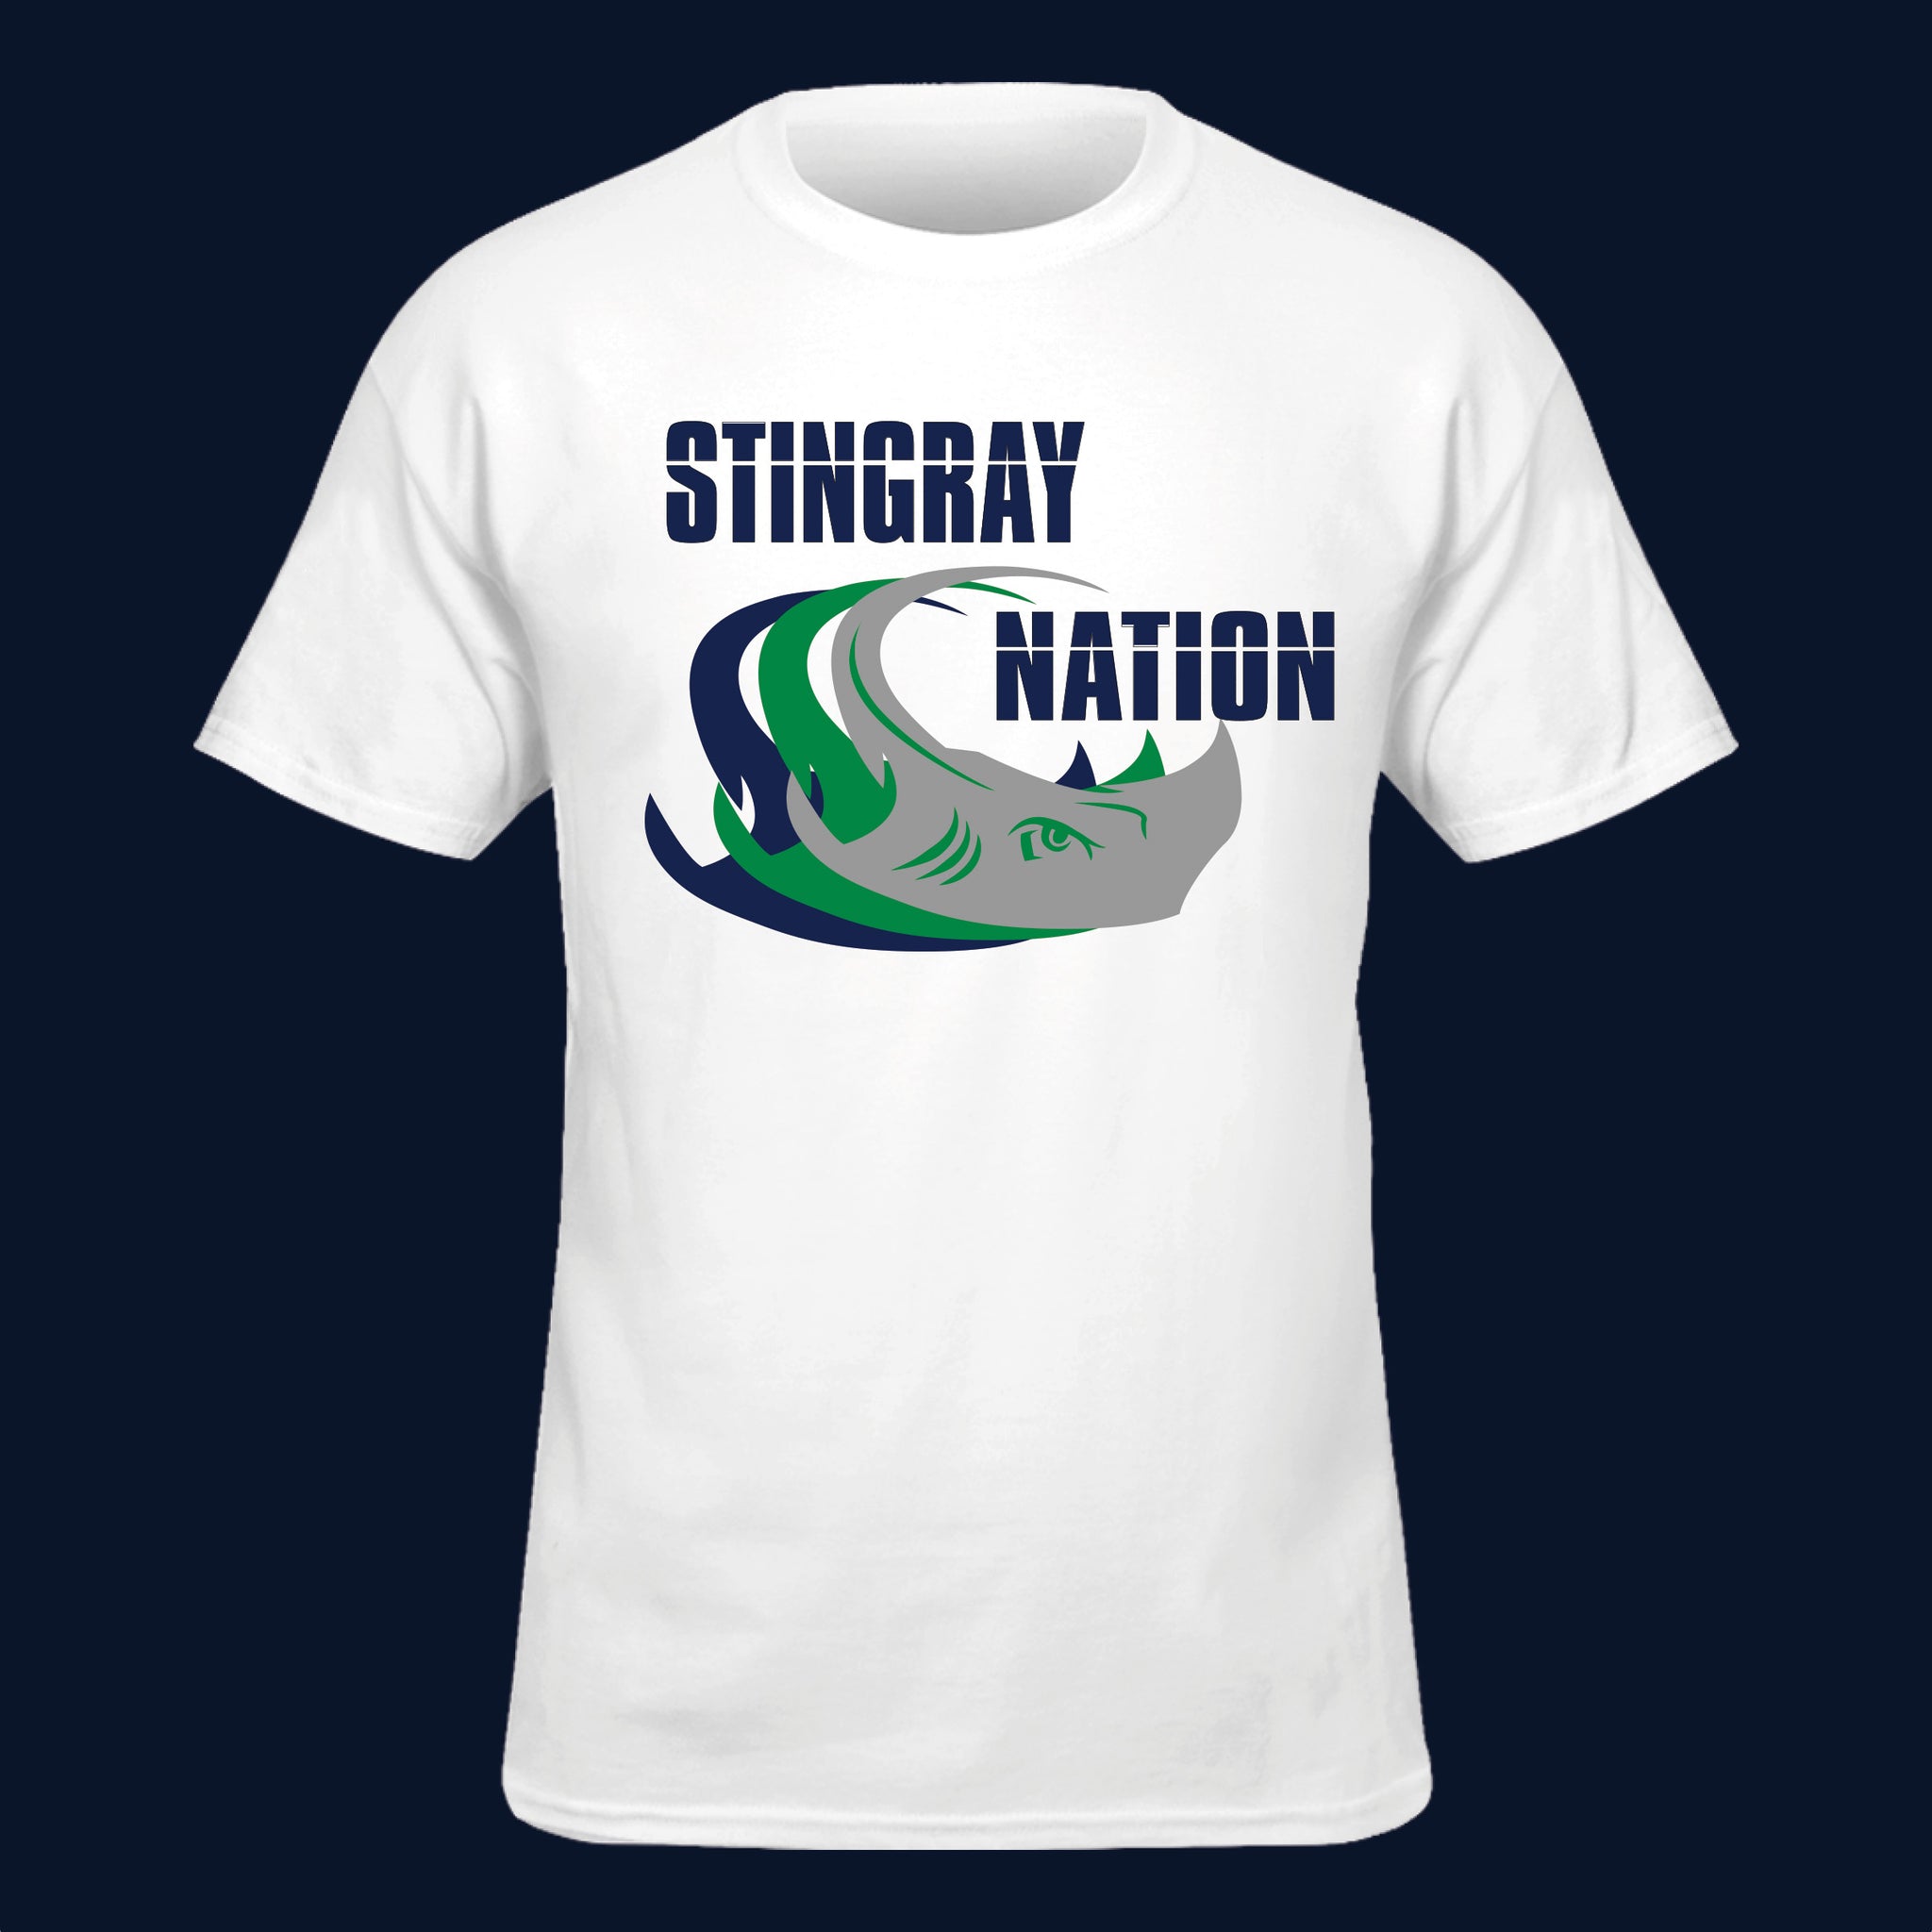 Sumner Stingray Nation Shirt - Peachy Brass